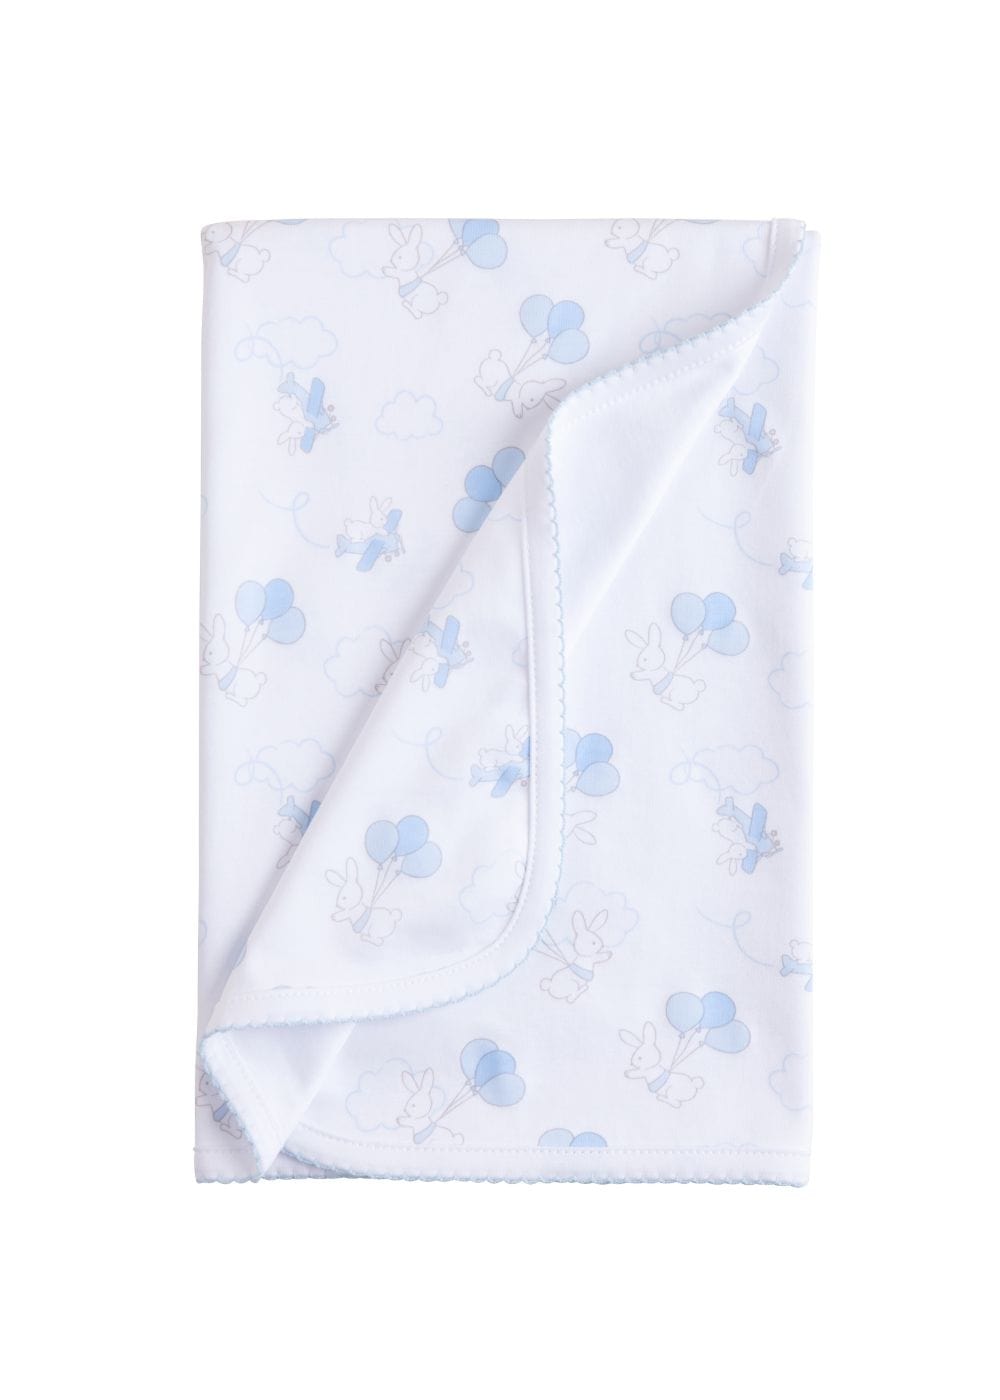 Little English boy printed swaddle blanket, blue bunny design for spring